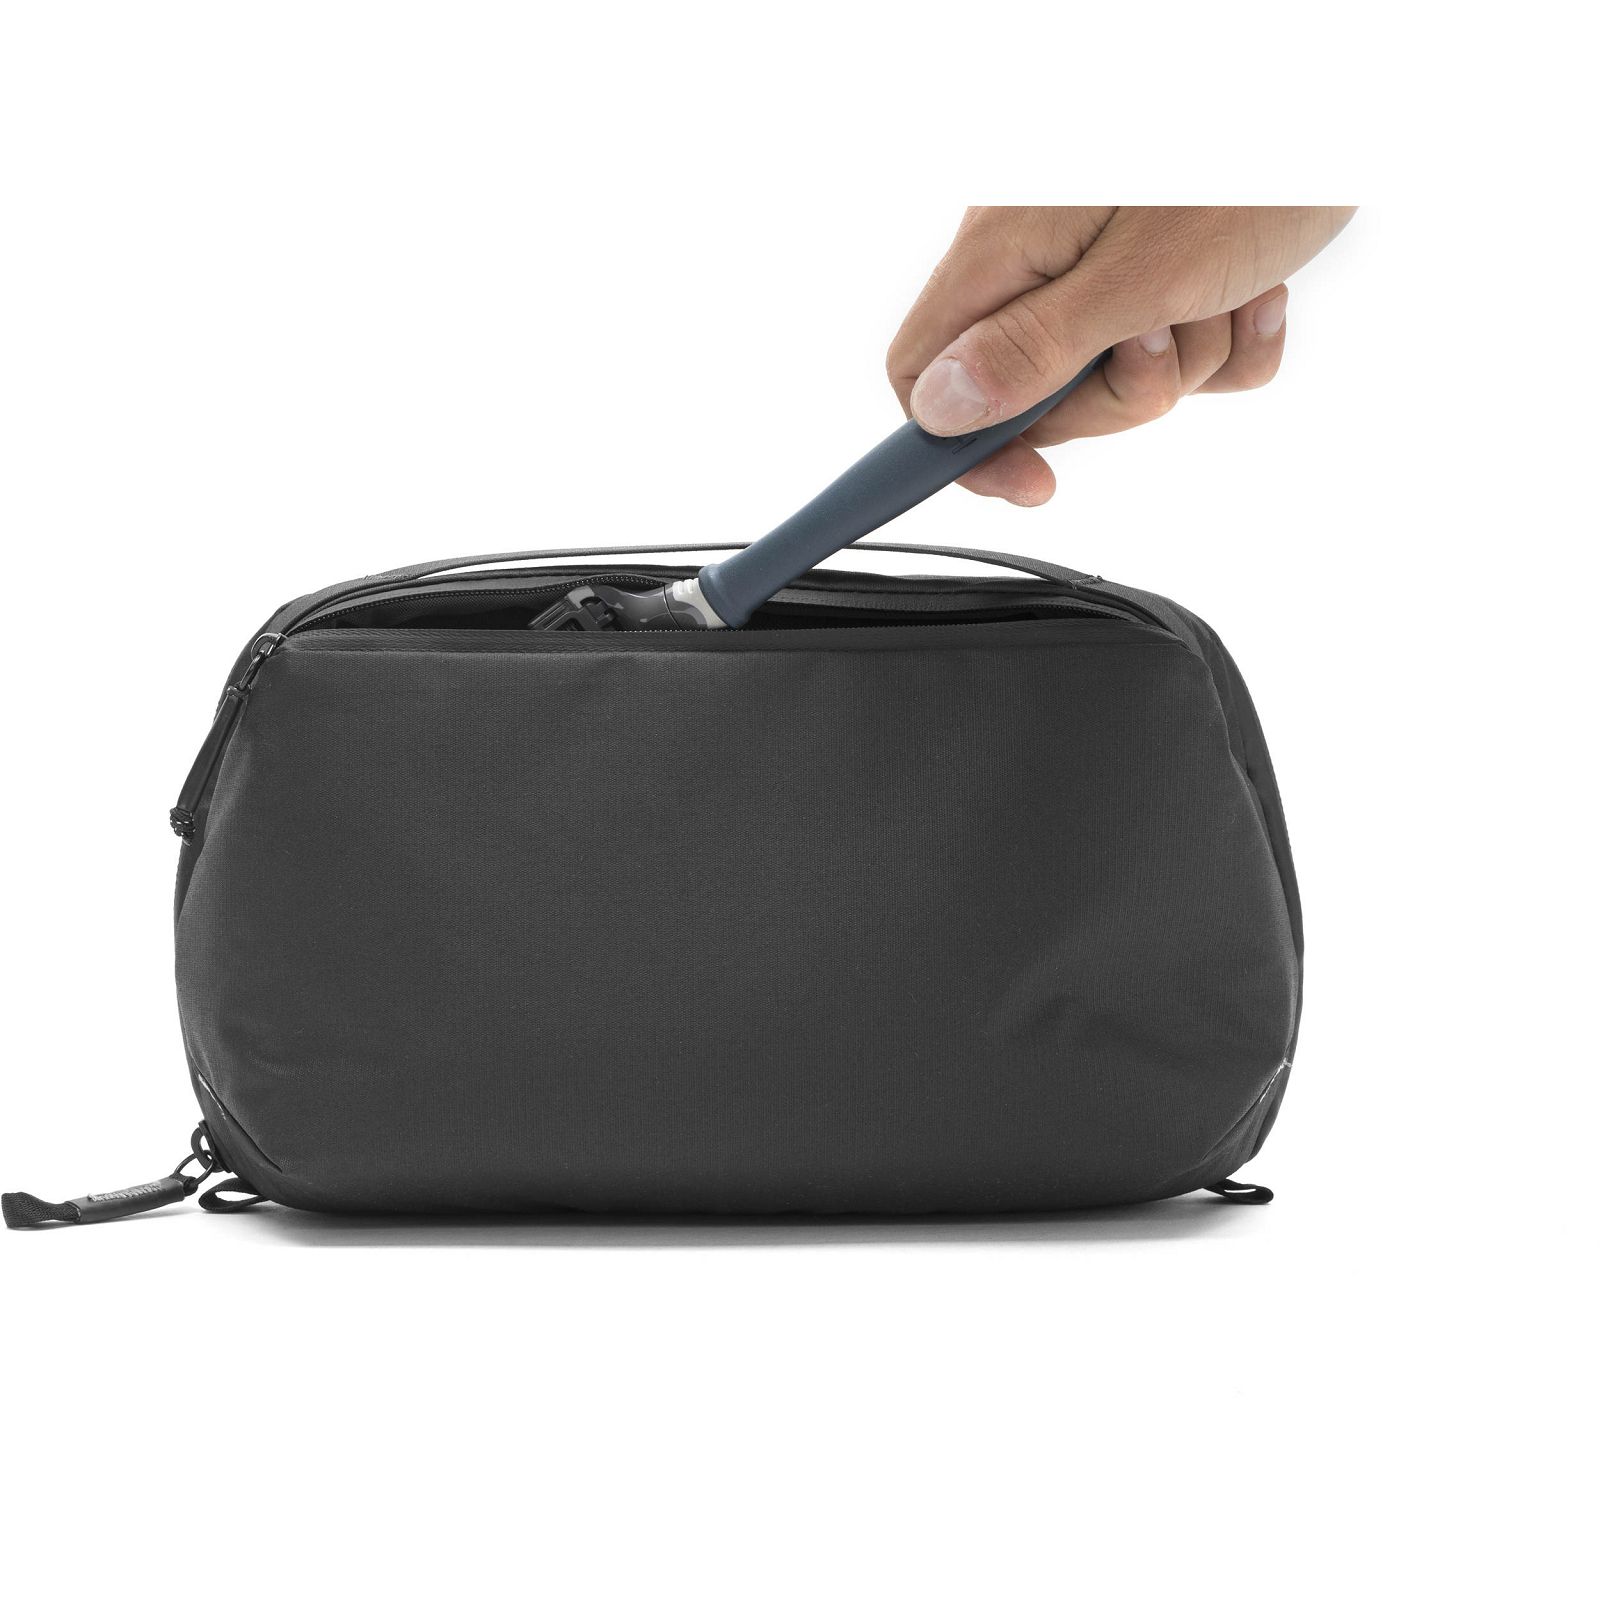 Peak Design Travel Wash Pouch Black torbica za raznu dodatnu opremu (BWP-BK-1)